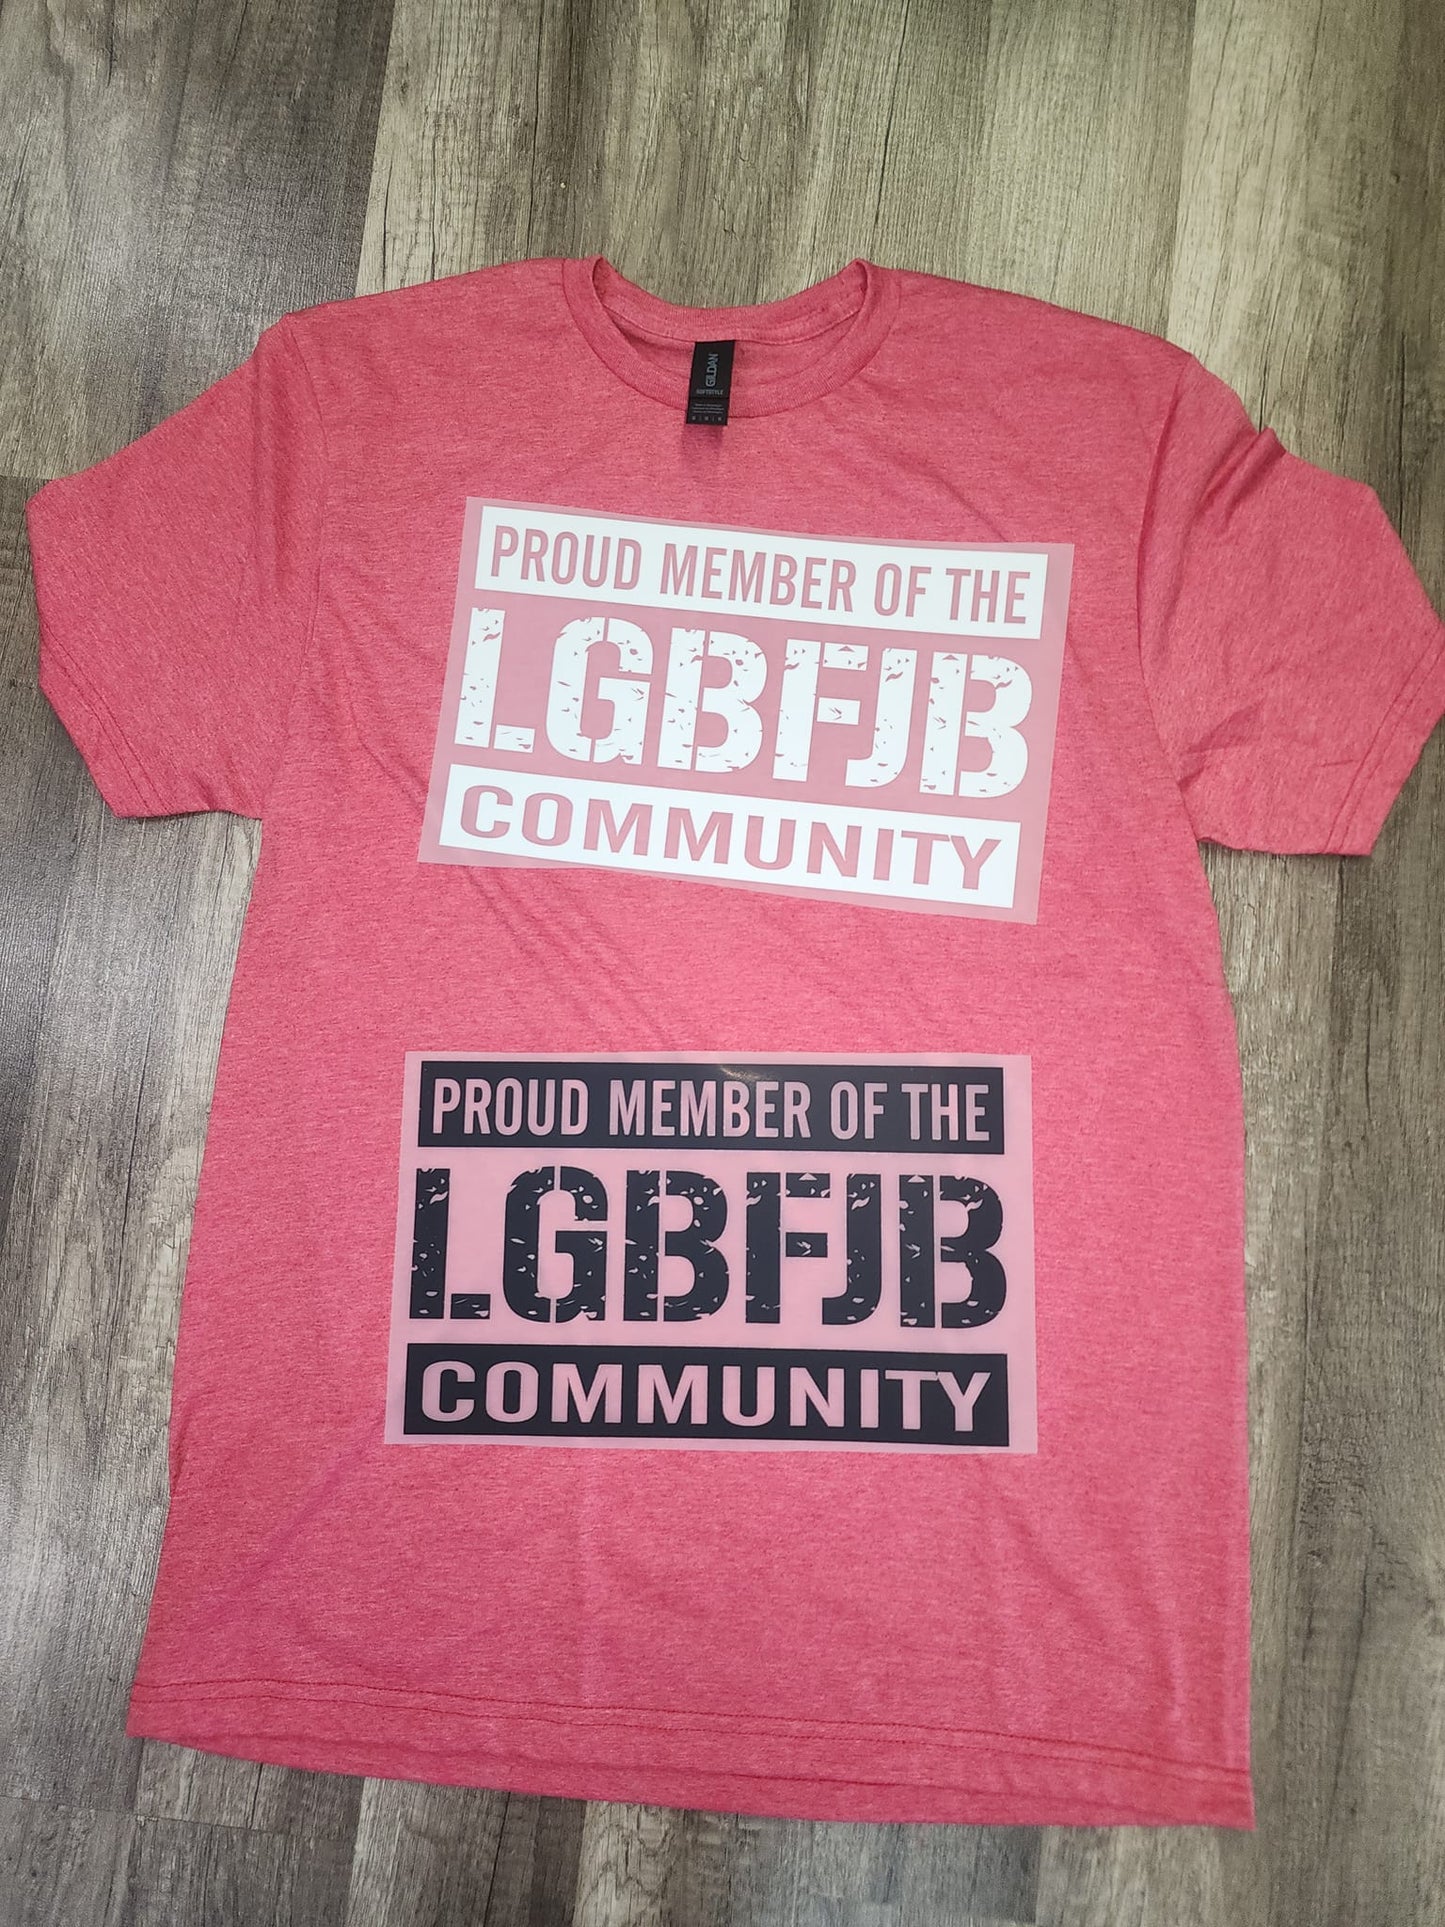 Proud Member of the LGBFJB Community